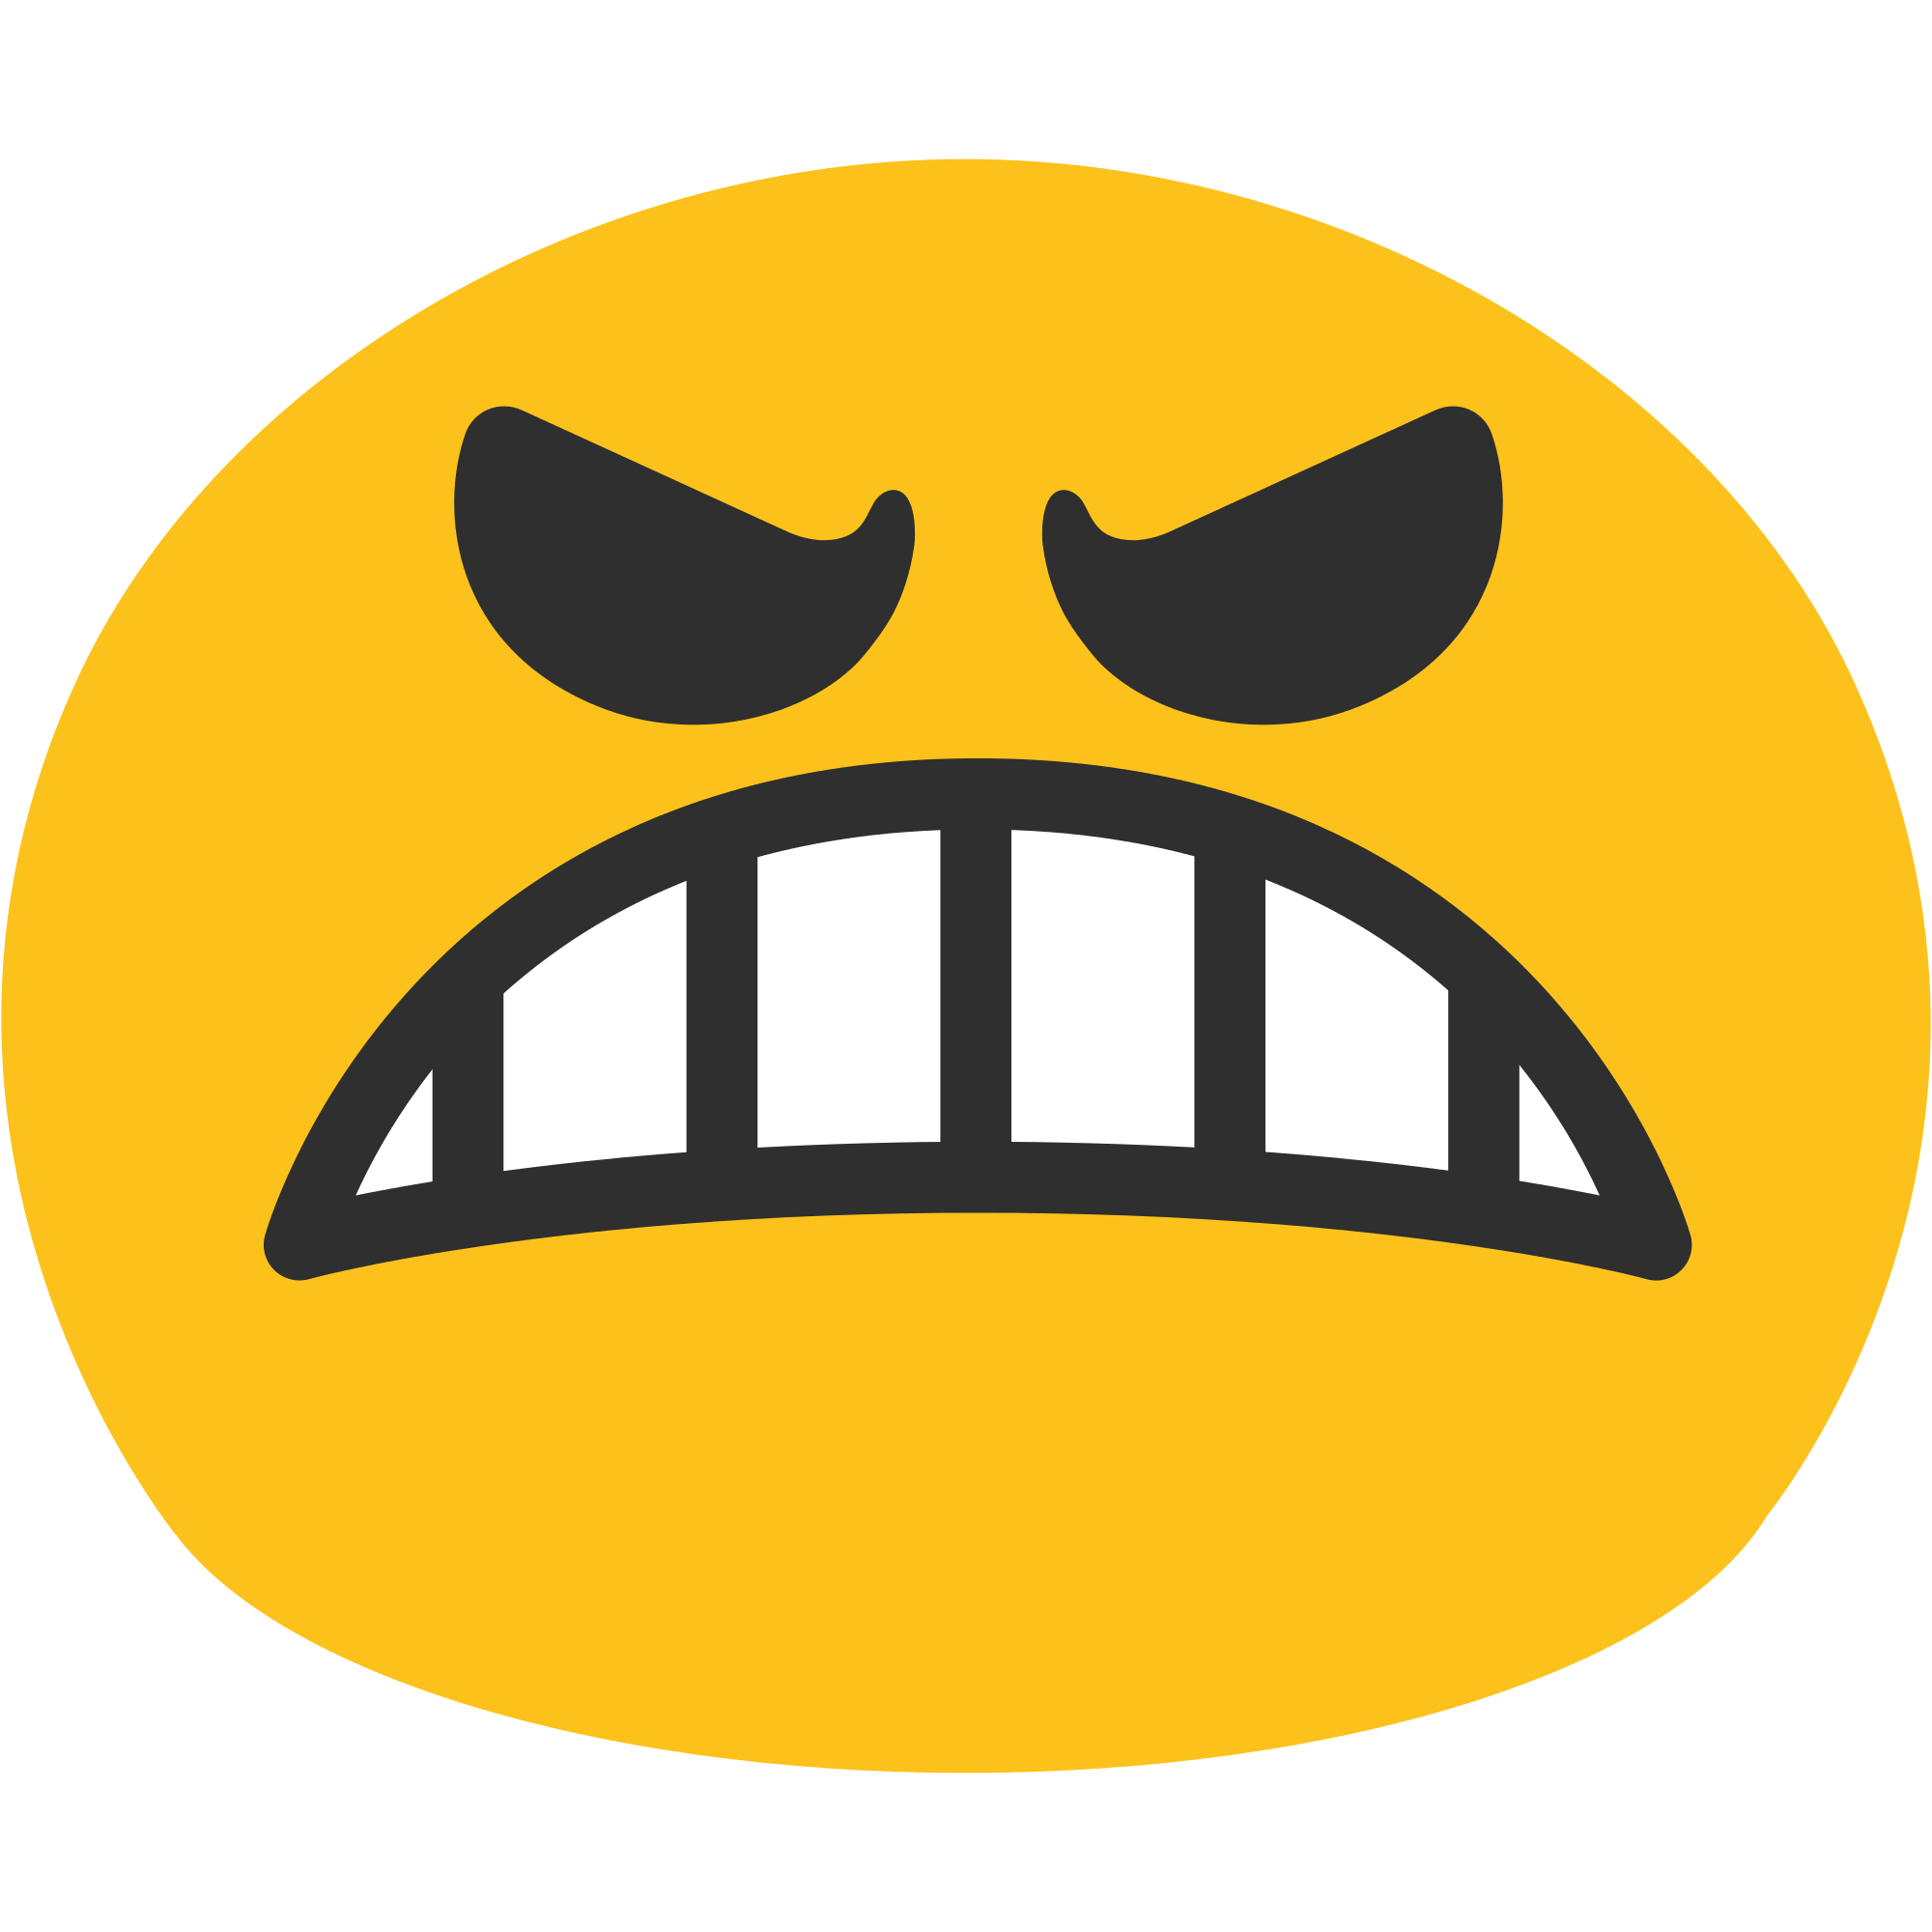 Kızgın emoji şeffaf arka plan